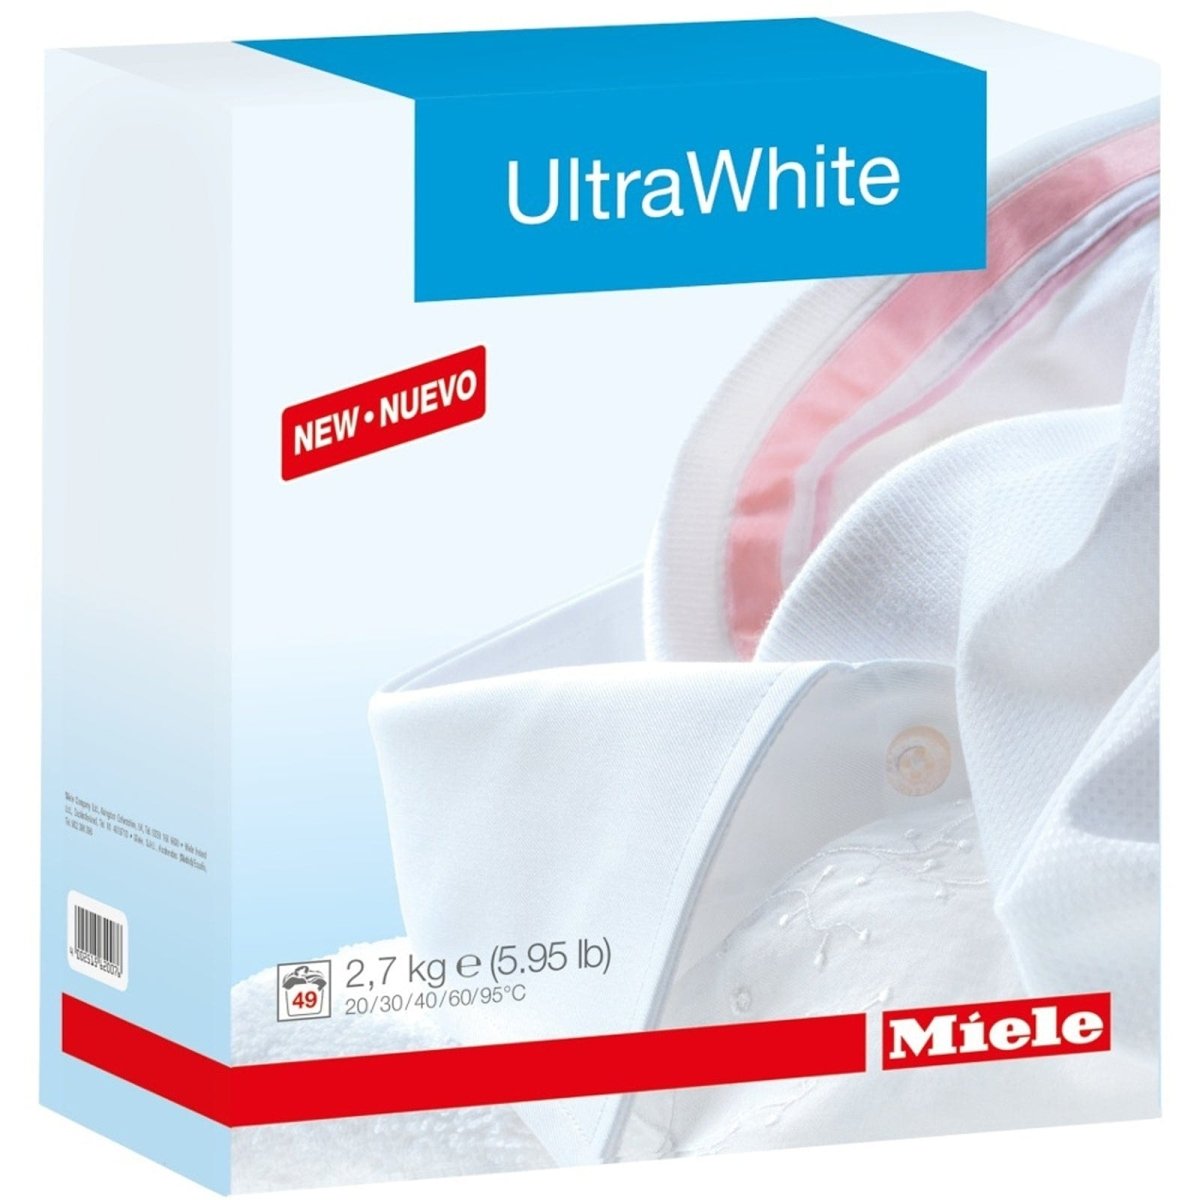 Miele 10199790 UltraWhite Washing Machine Powder Detergent (2.7kg) | Atlantic Electrics